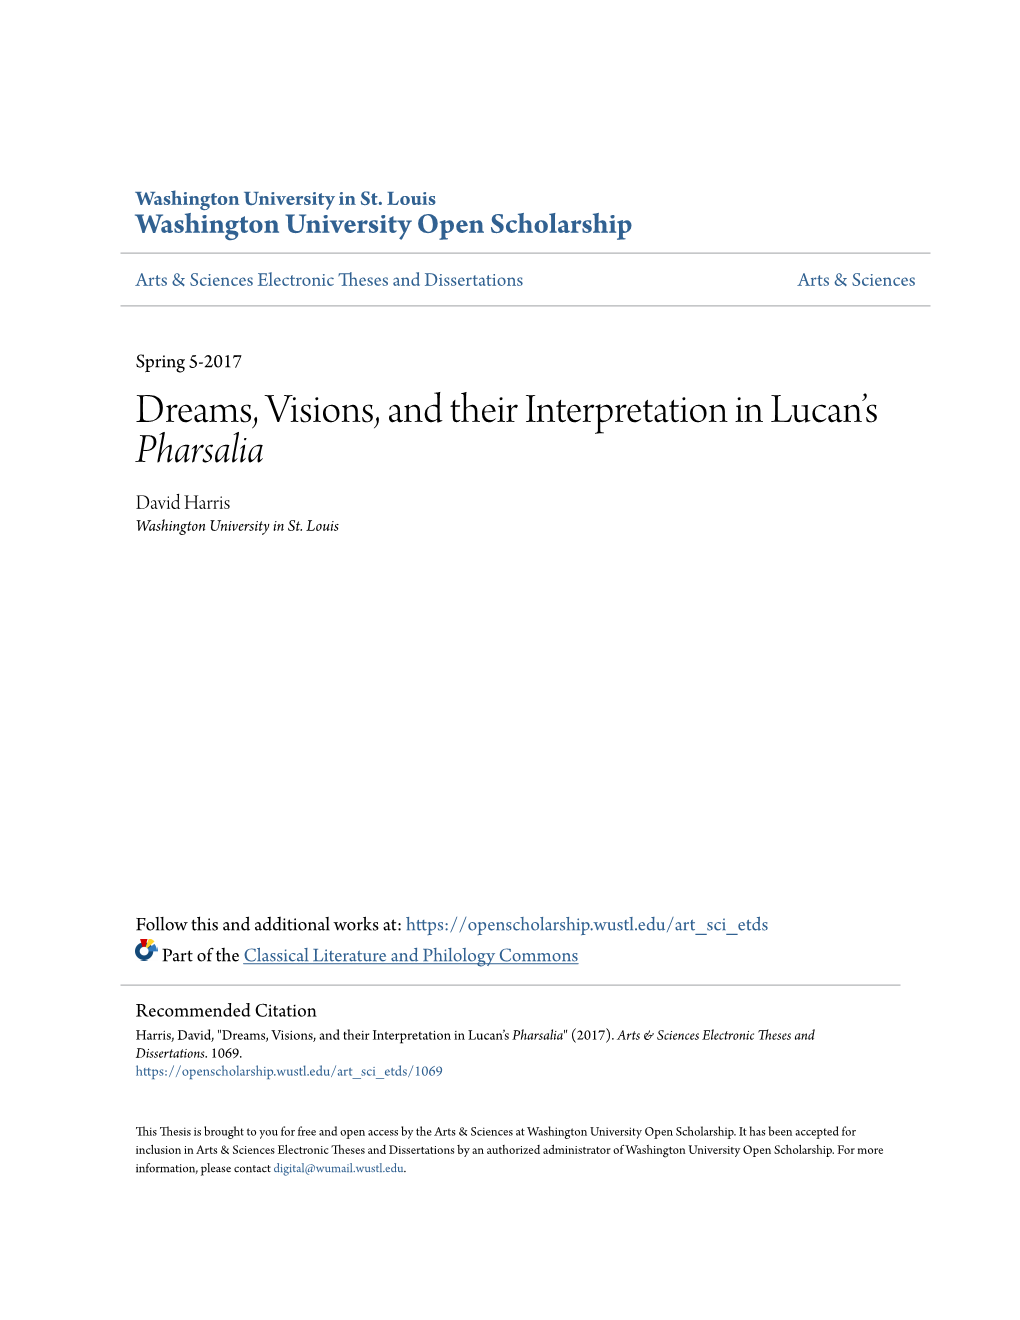 Dreams, Visions, and Their Interpretation in Lucan's &lt;I&gt;Pharsalia&lt;/I&gt;